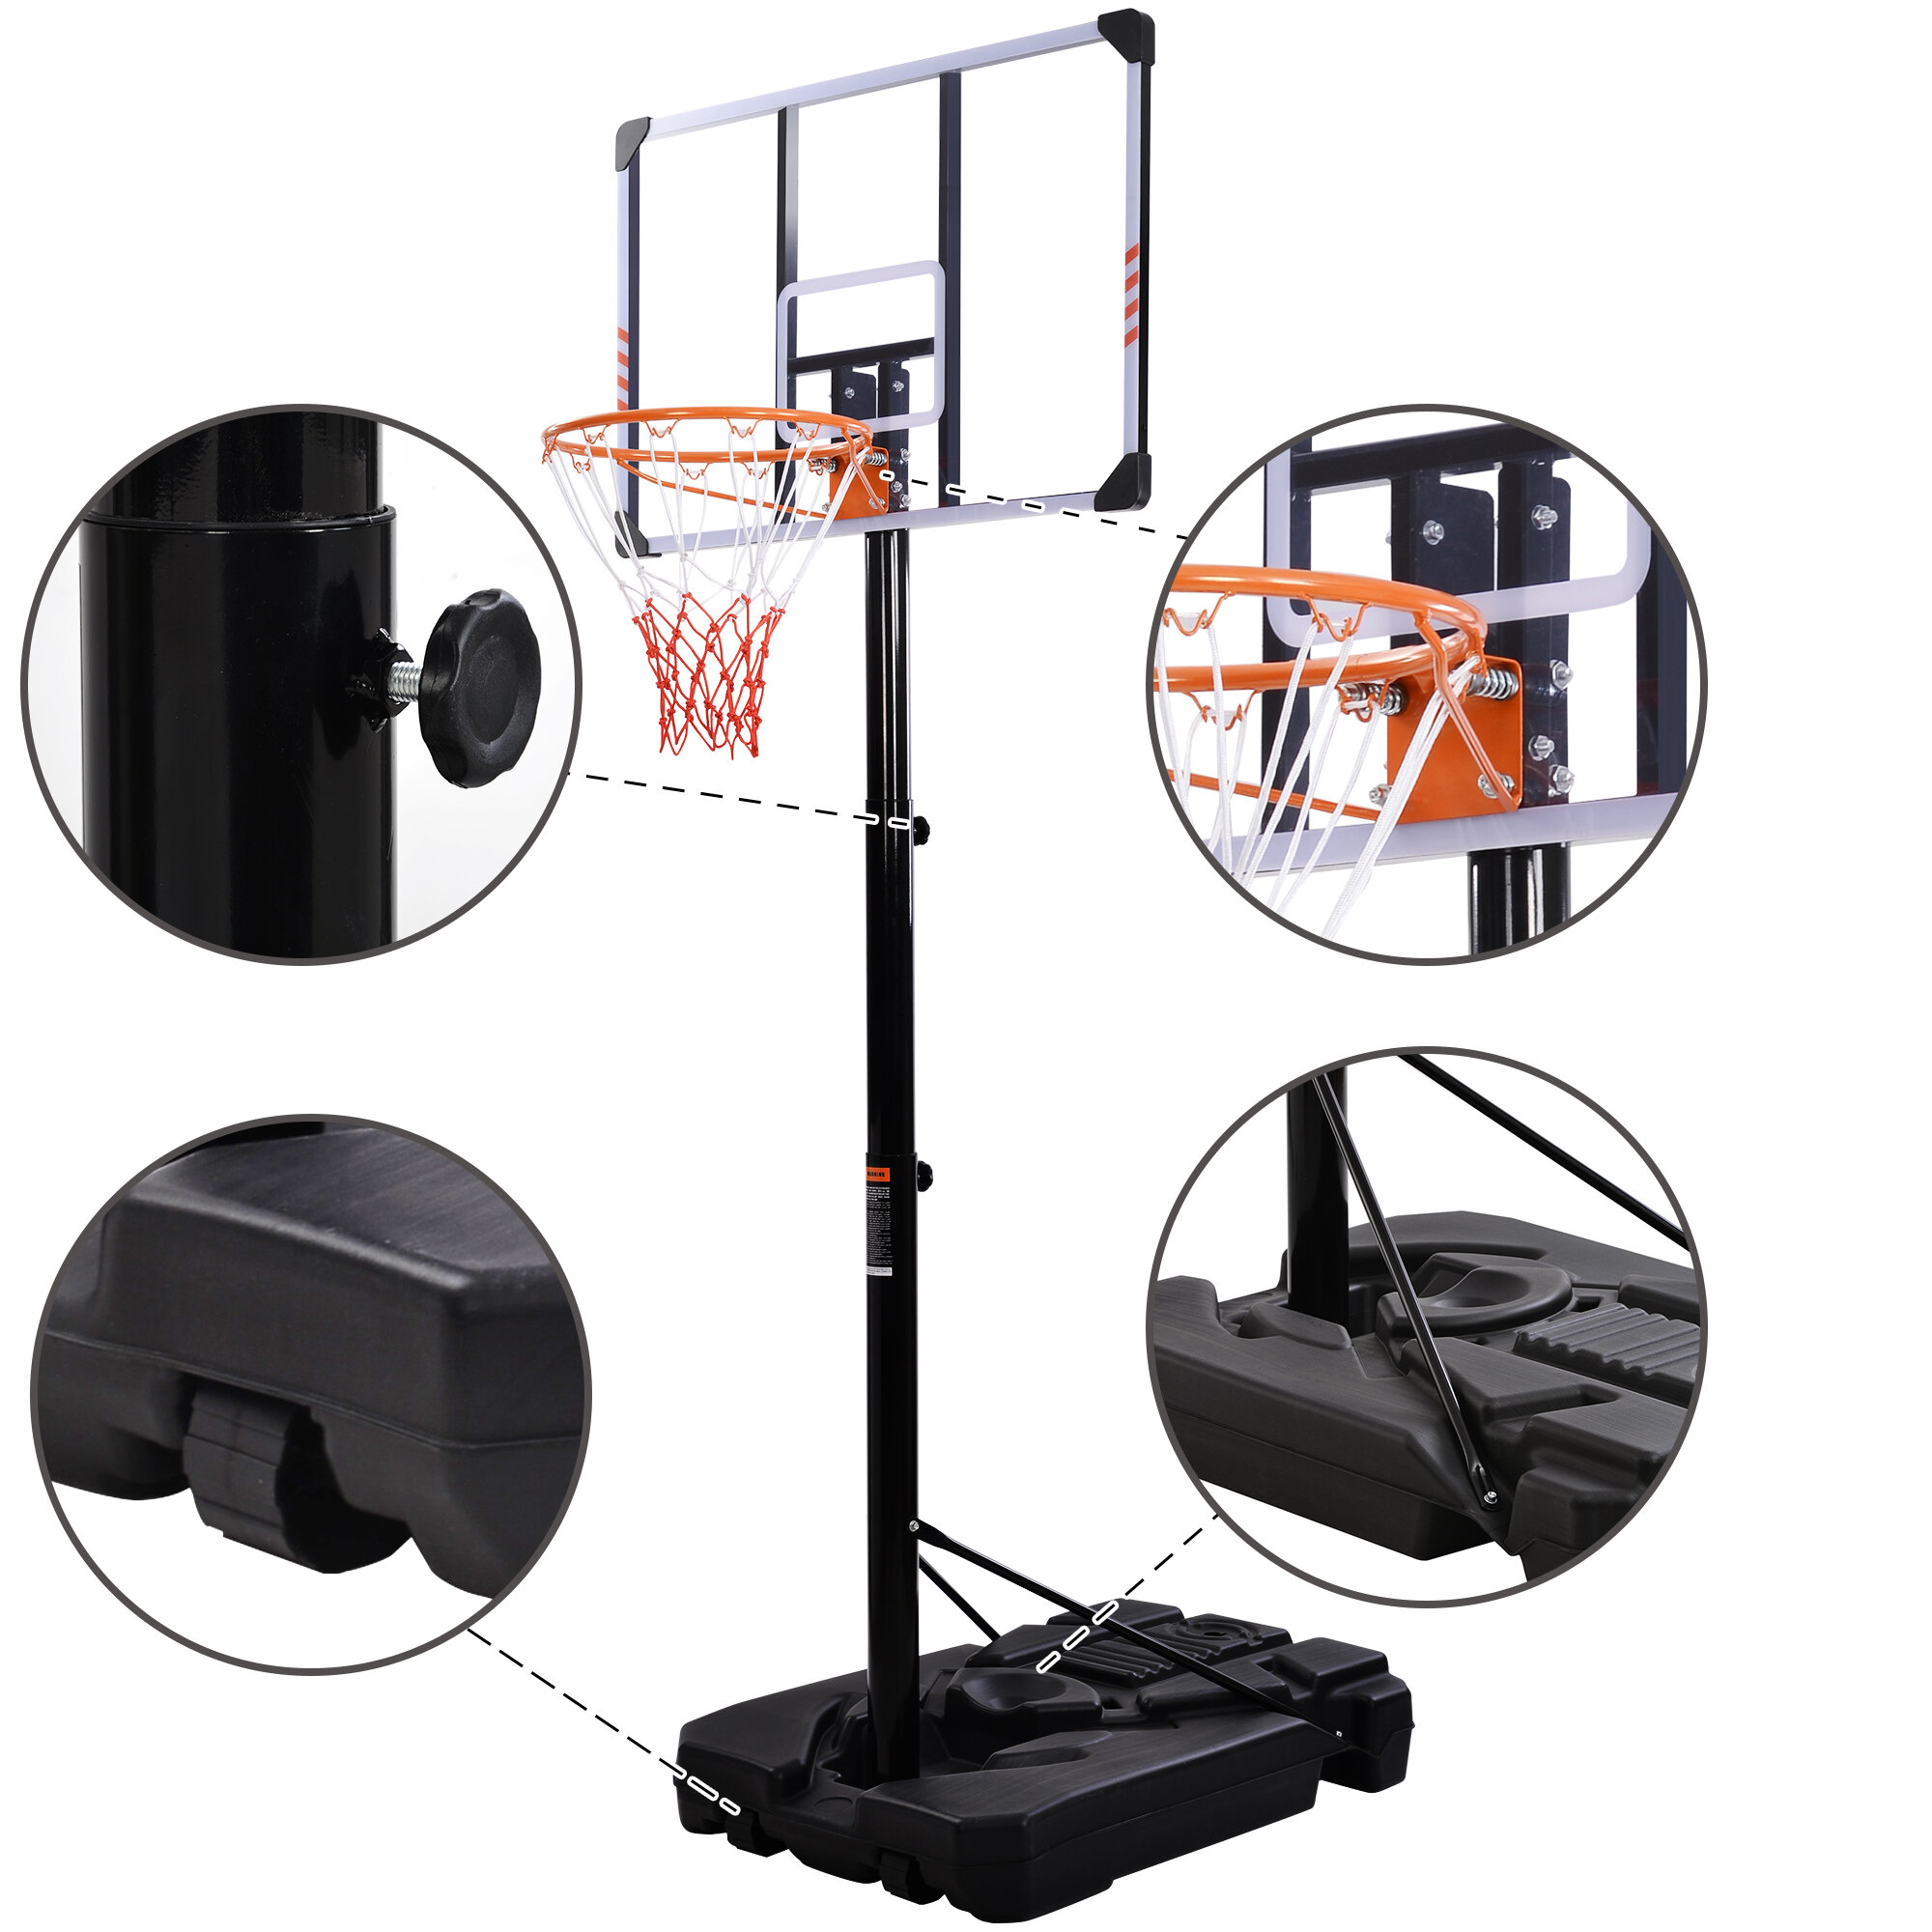 Image of [EU Direct] Bominfit Portable Basketball Hoop 8-position Height Adjustment 225-305cm Water/Sand Filled Adult/Children's